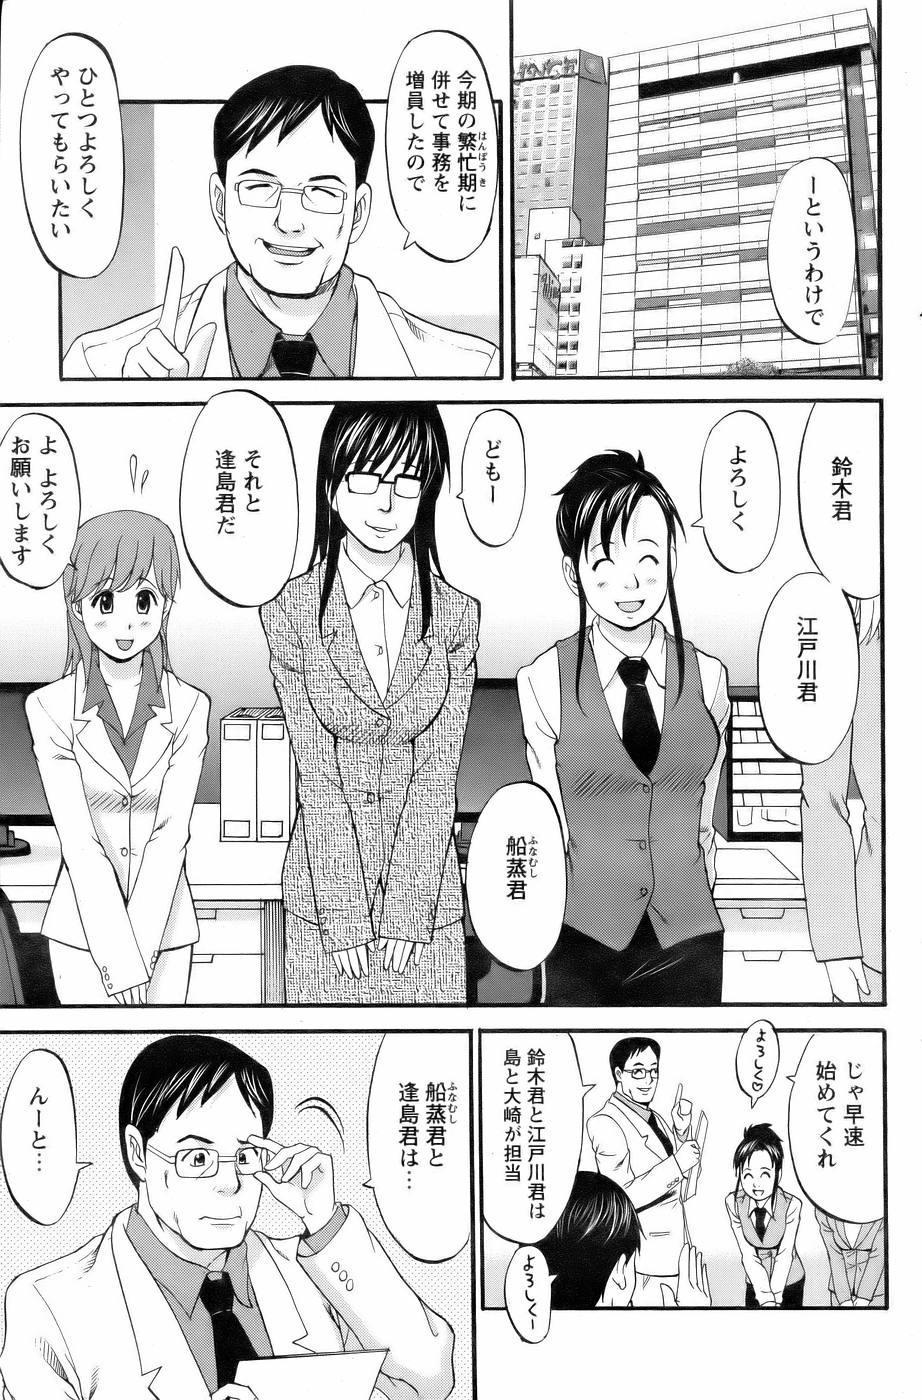 Sister Haken no Muuko San 3 18 Year Old - Page 6